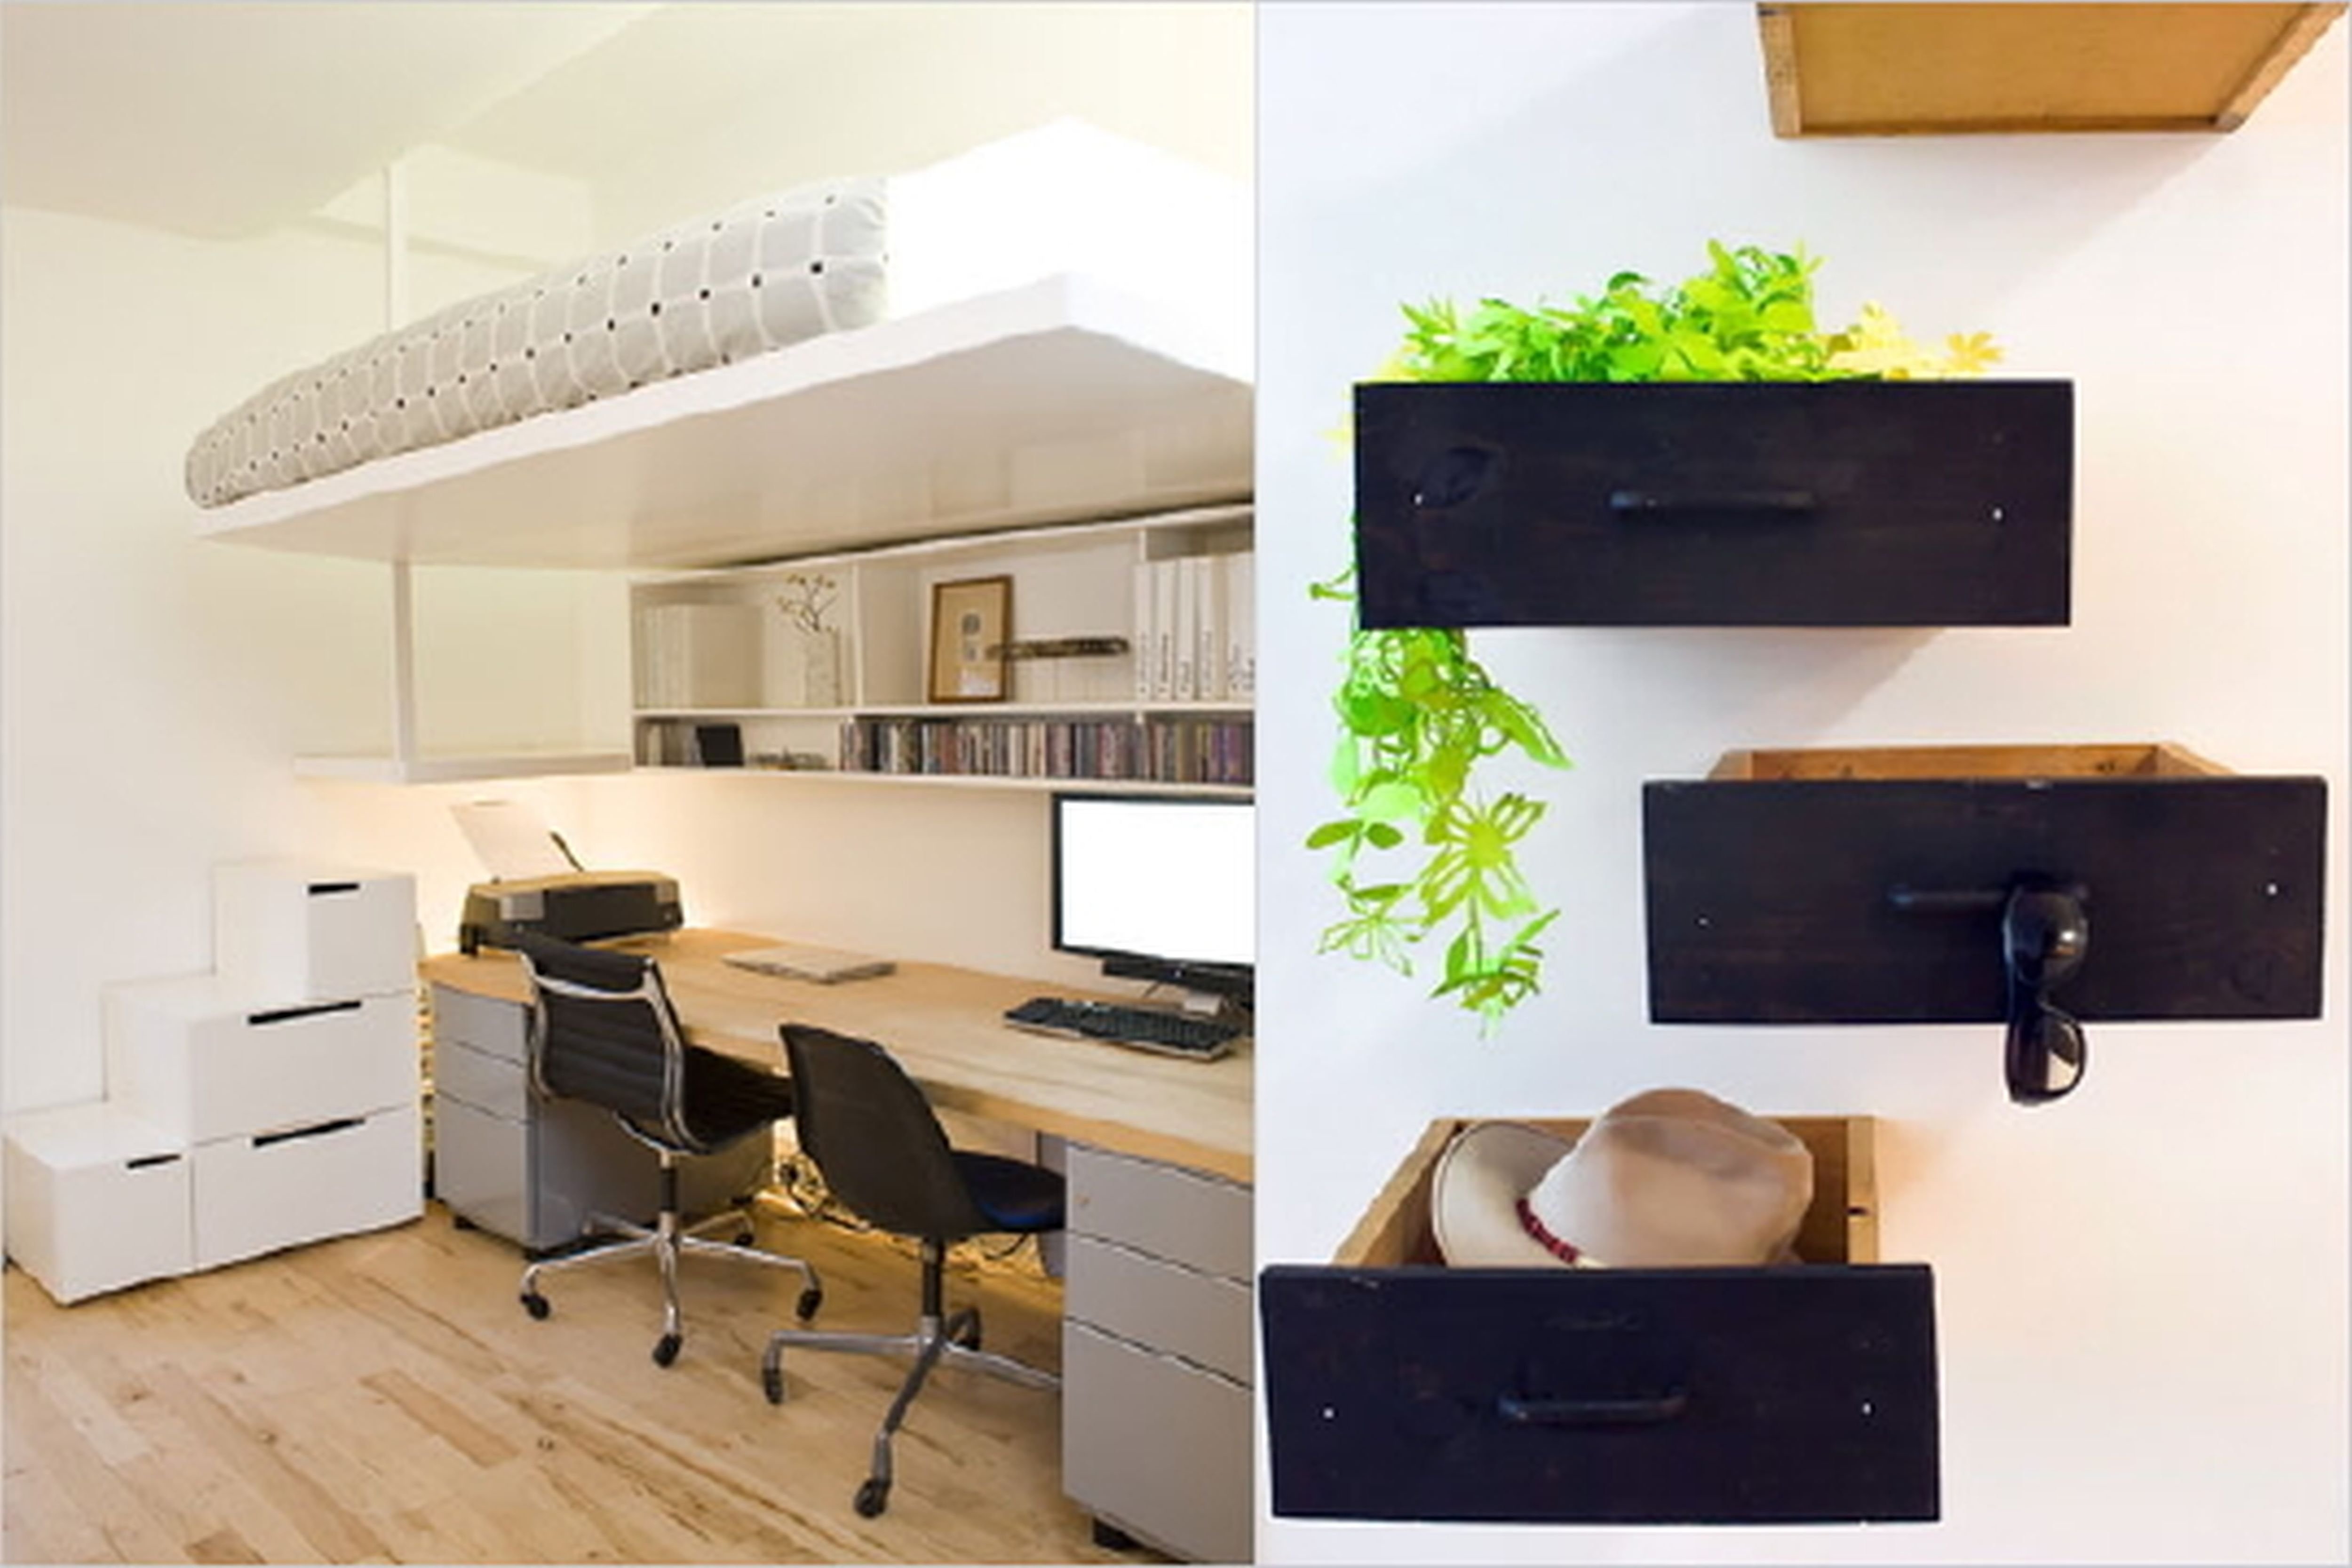 10 Fashionable Cheap Diy Decorating Ideas For Apartments popular diy home decor ideas living room decordiy decorating 1 2022